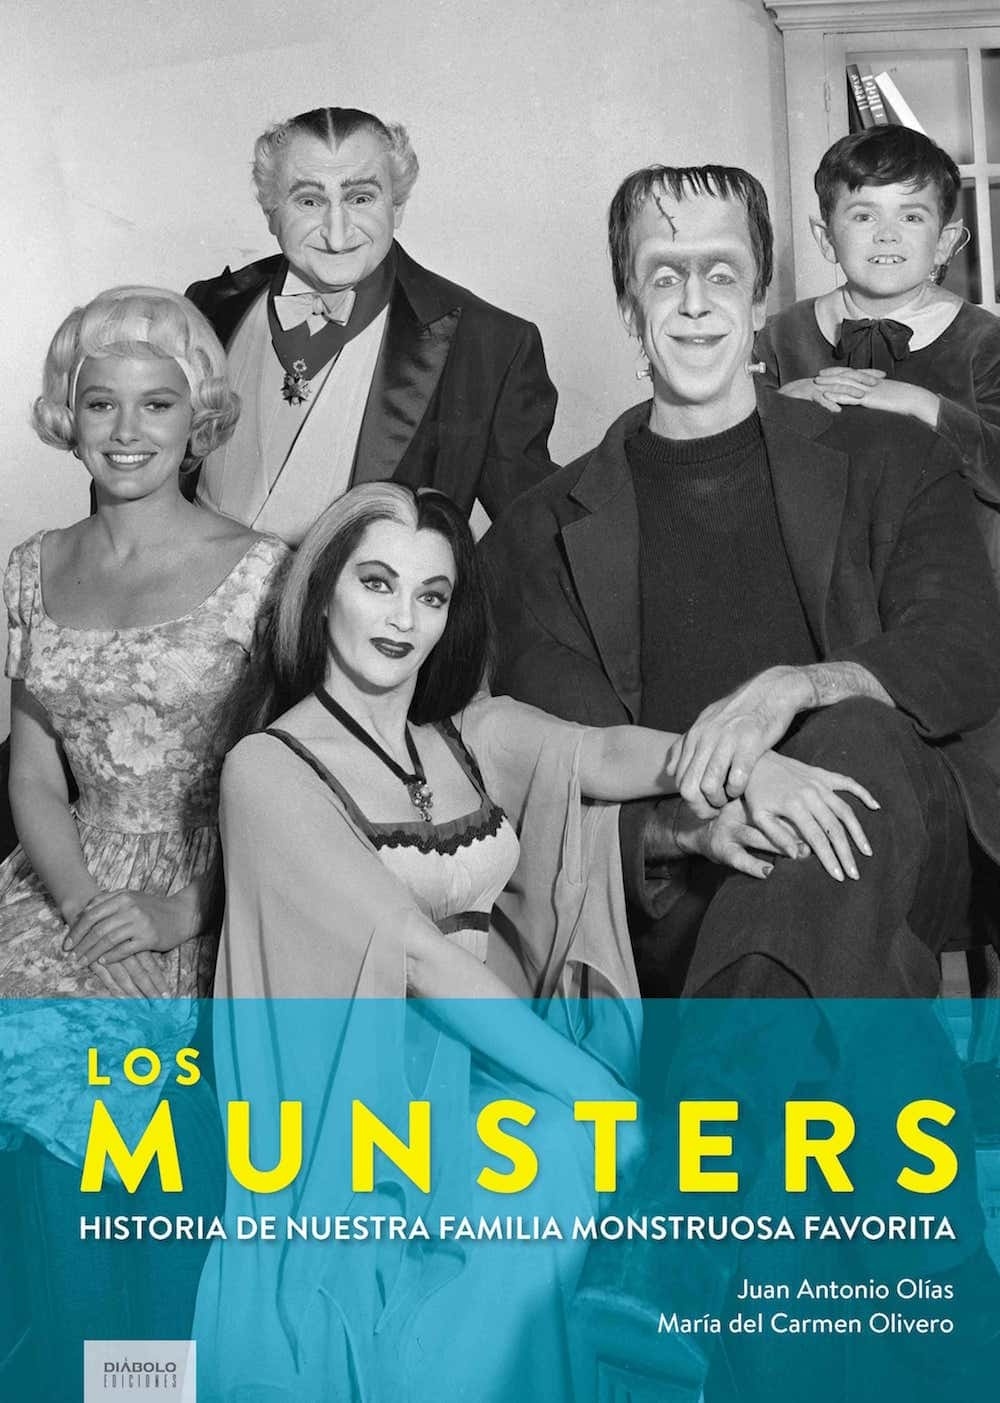 Munsters. Historia de nuestra familia monstruosa favorita